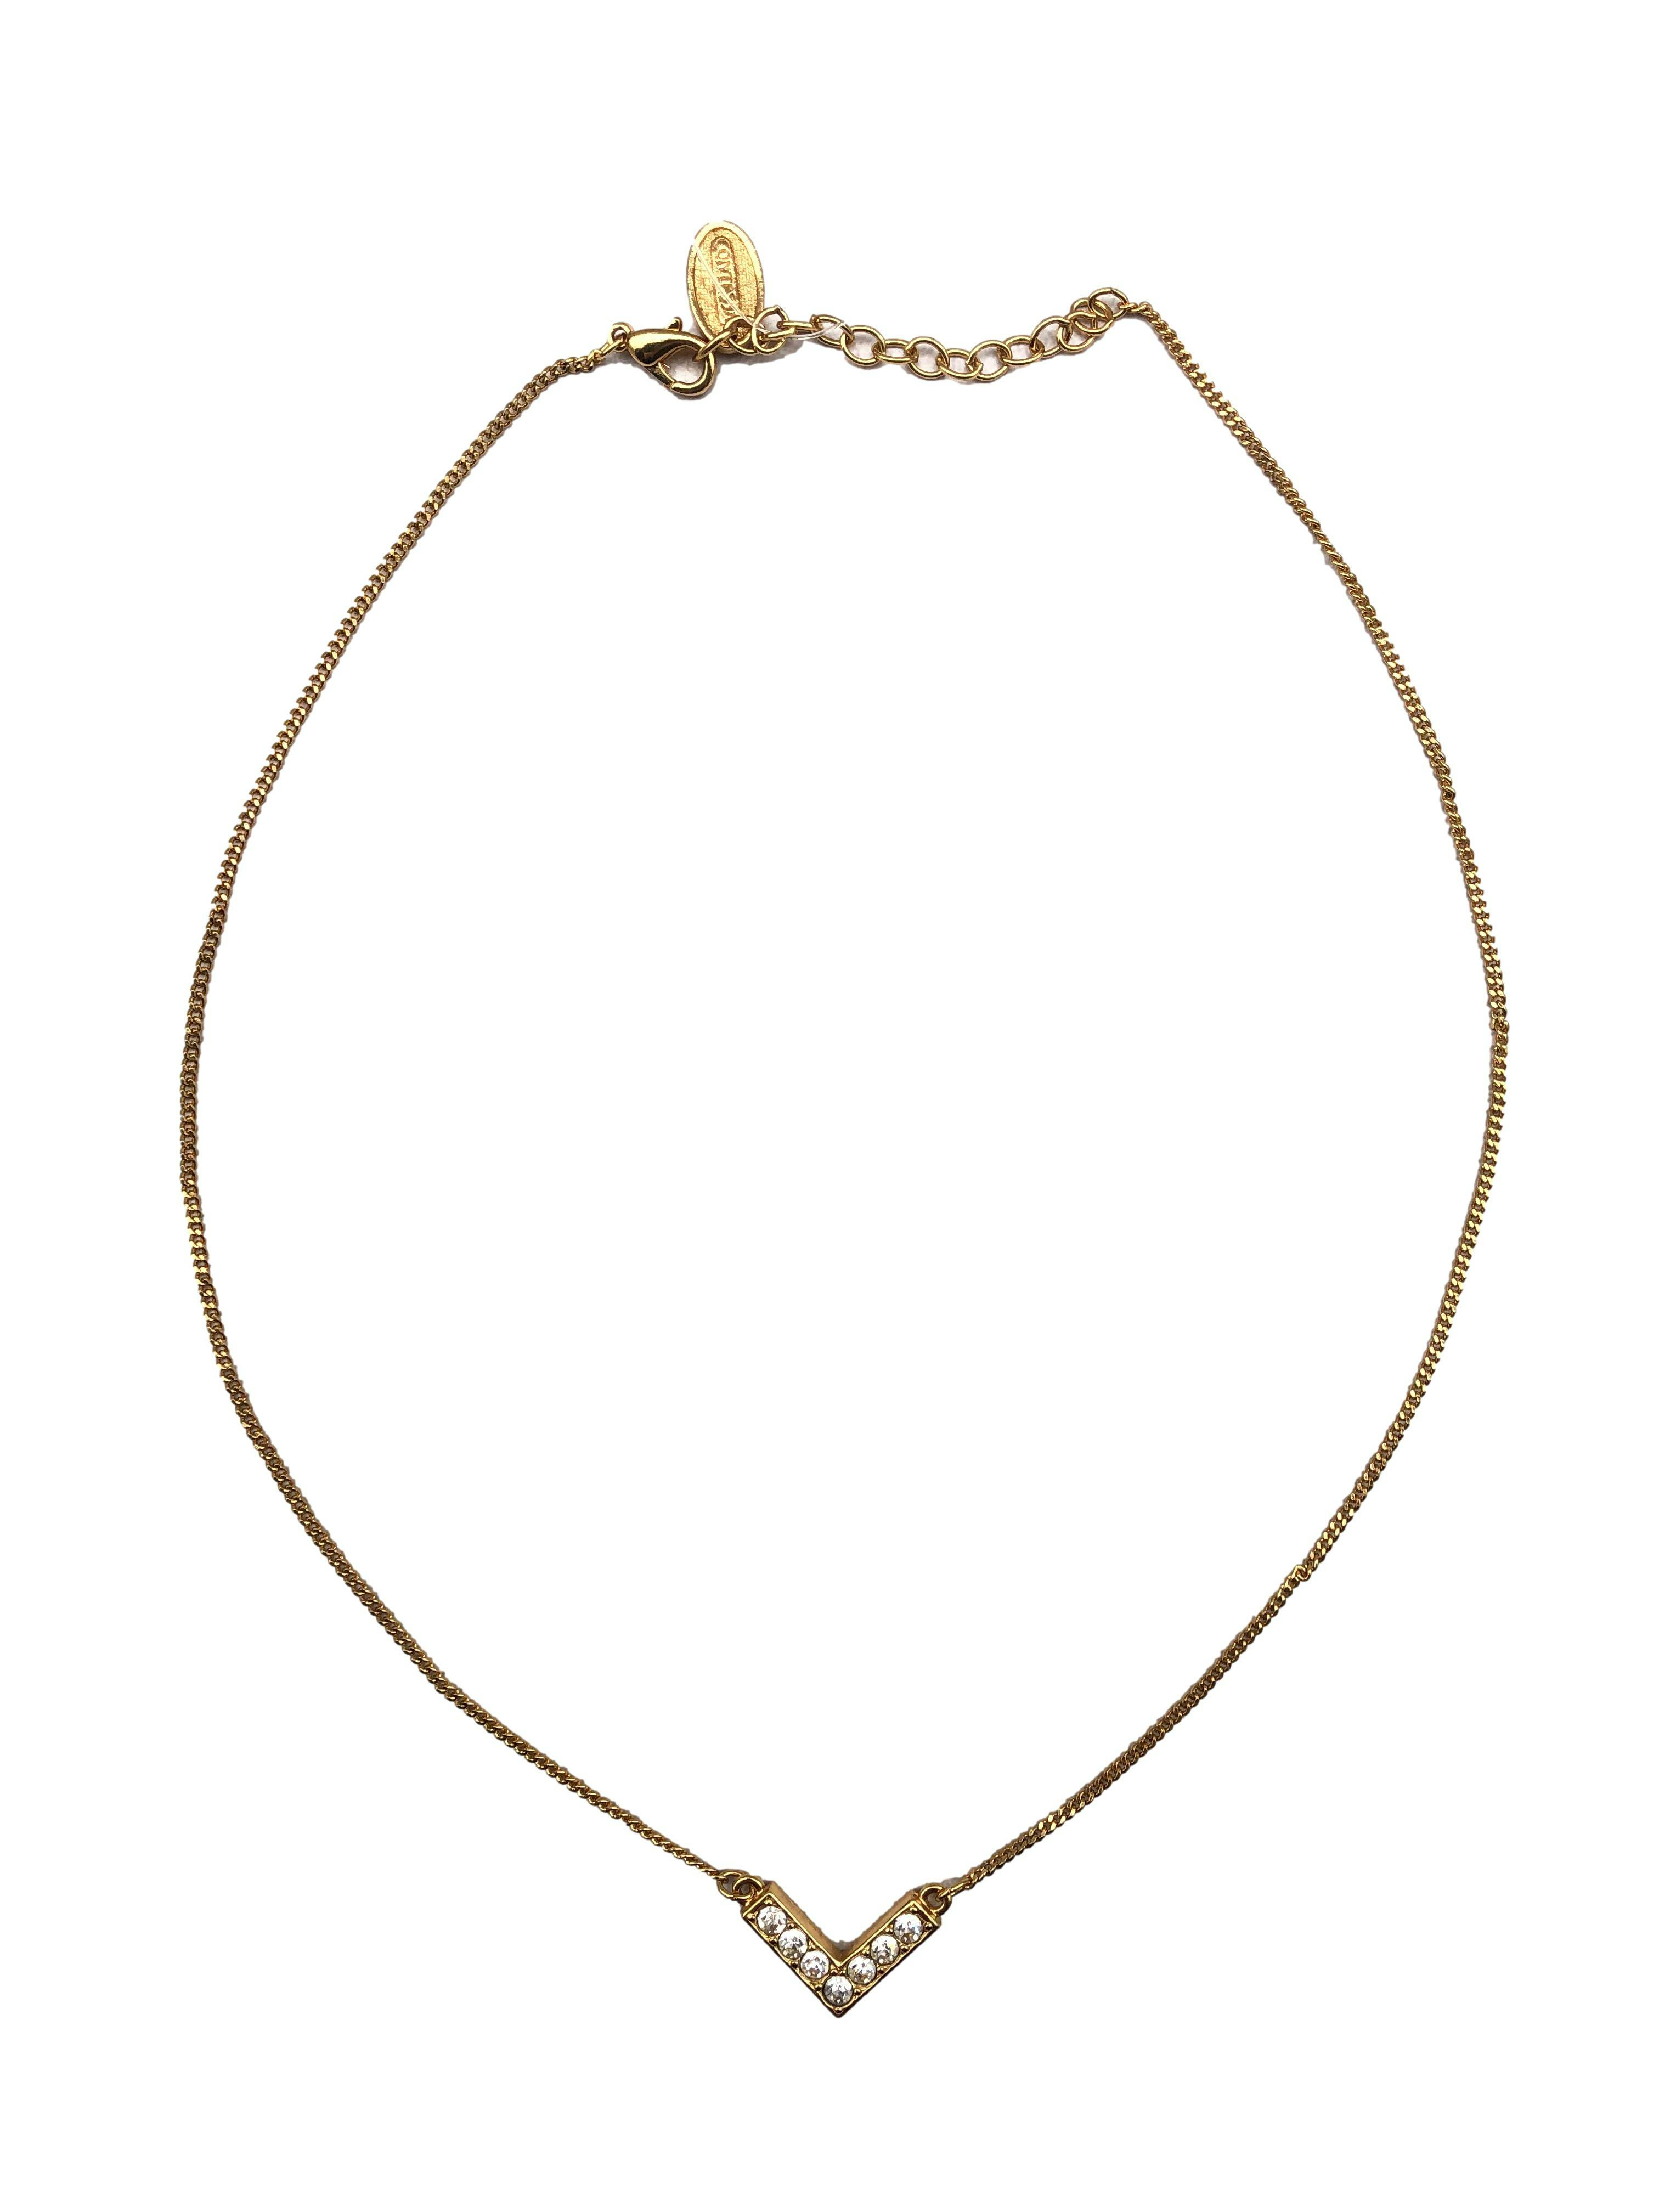 Collar Contessa, color oro con cristales en dije. Largo 44cm-5cm.